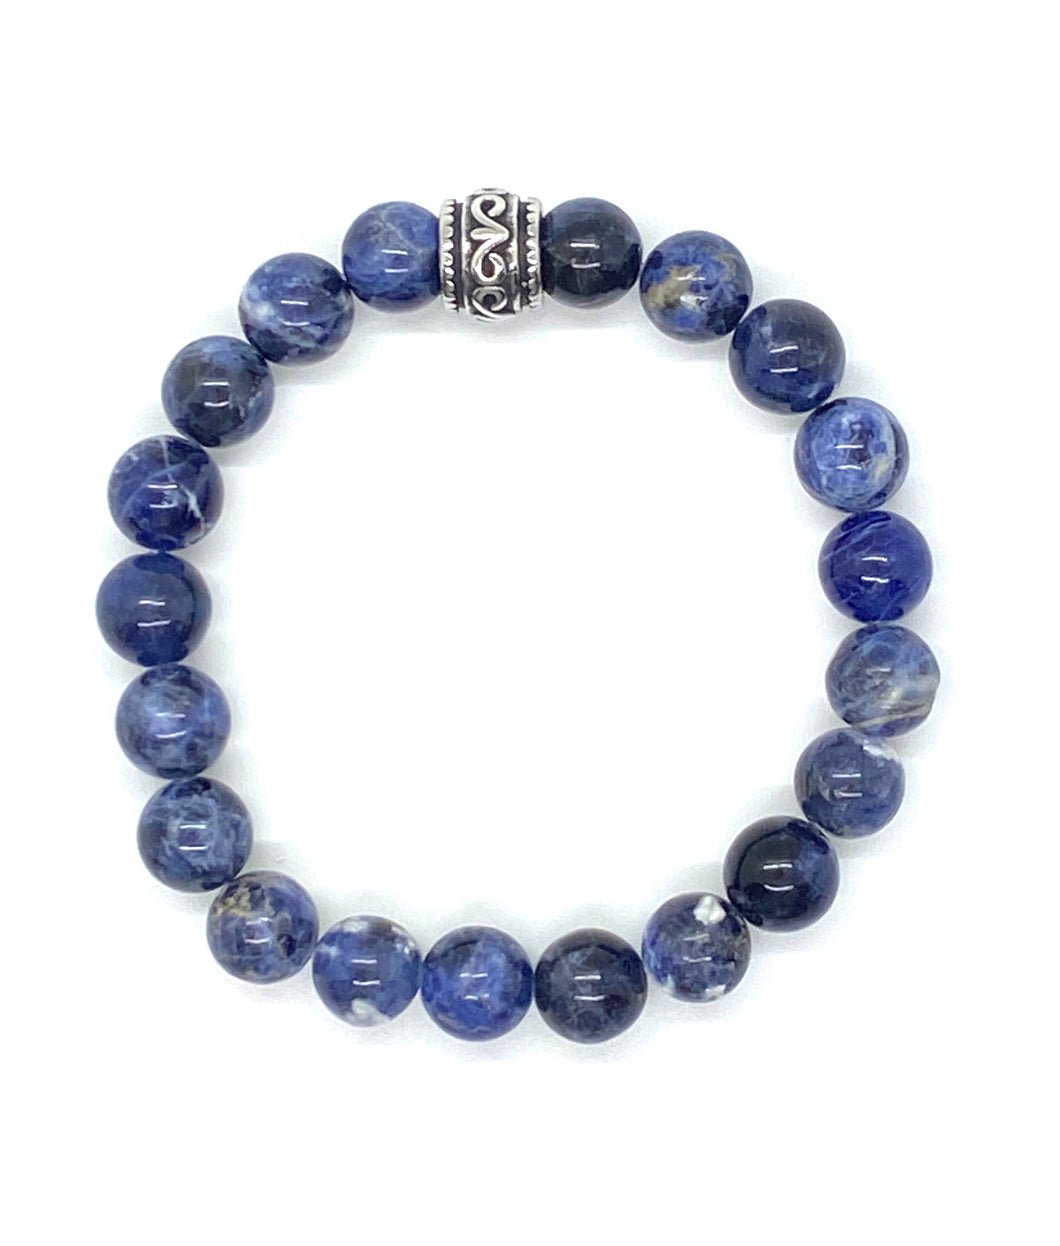 Indigo Cobalt Blue Imperial Jasper Gemstone bracelet with Stainless Steel Accent